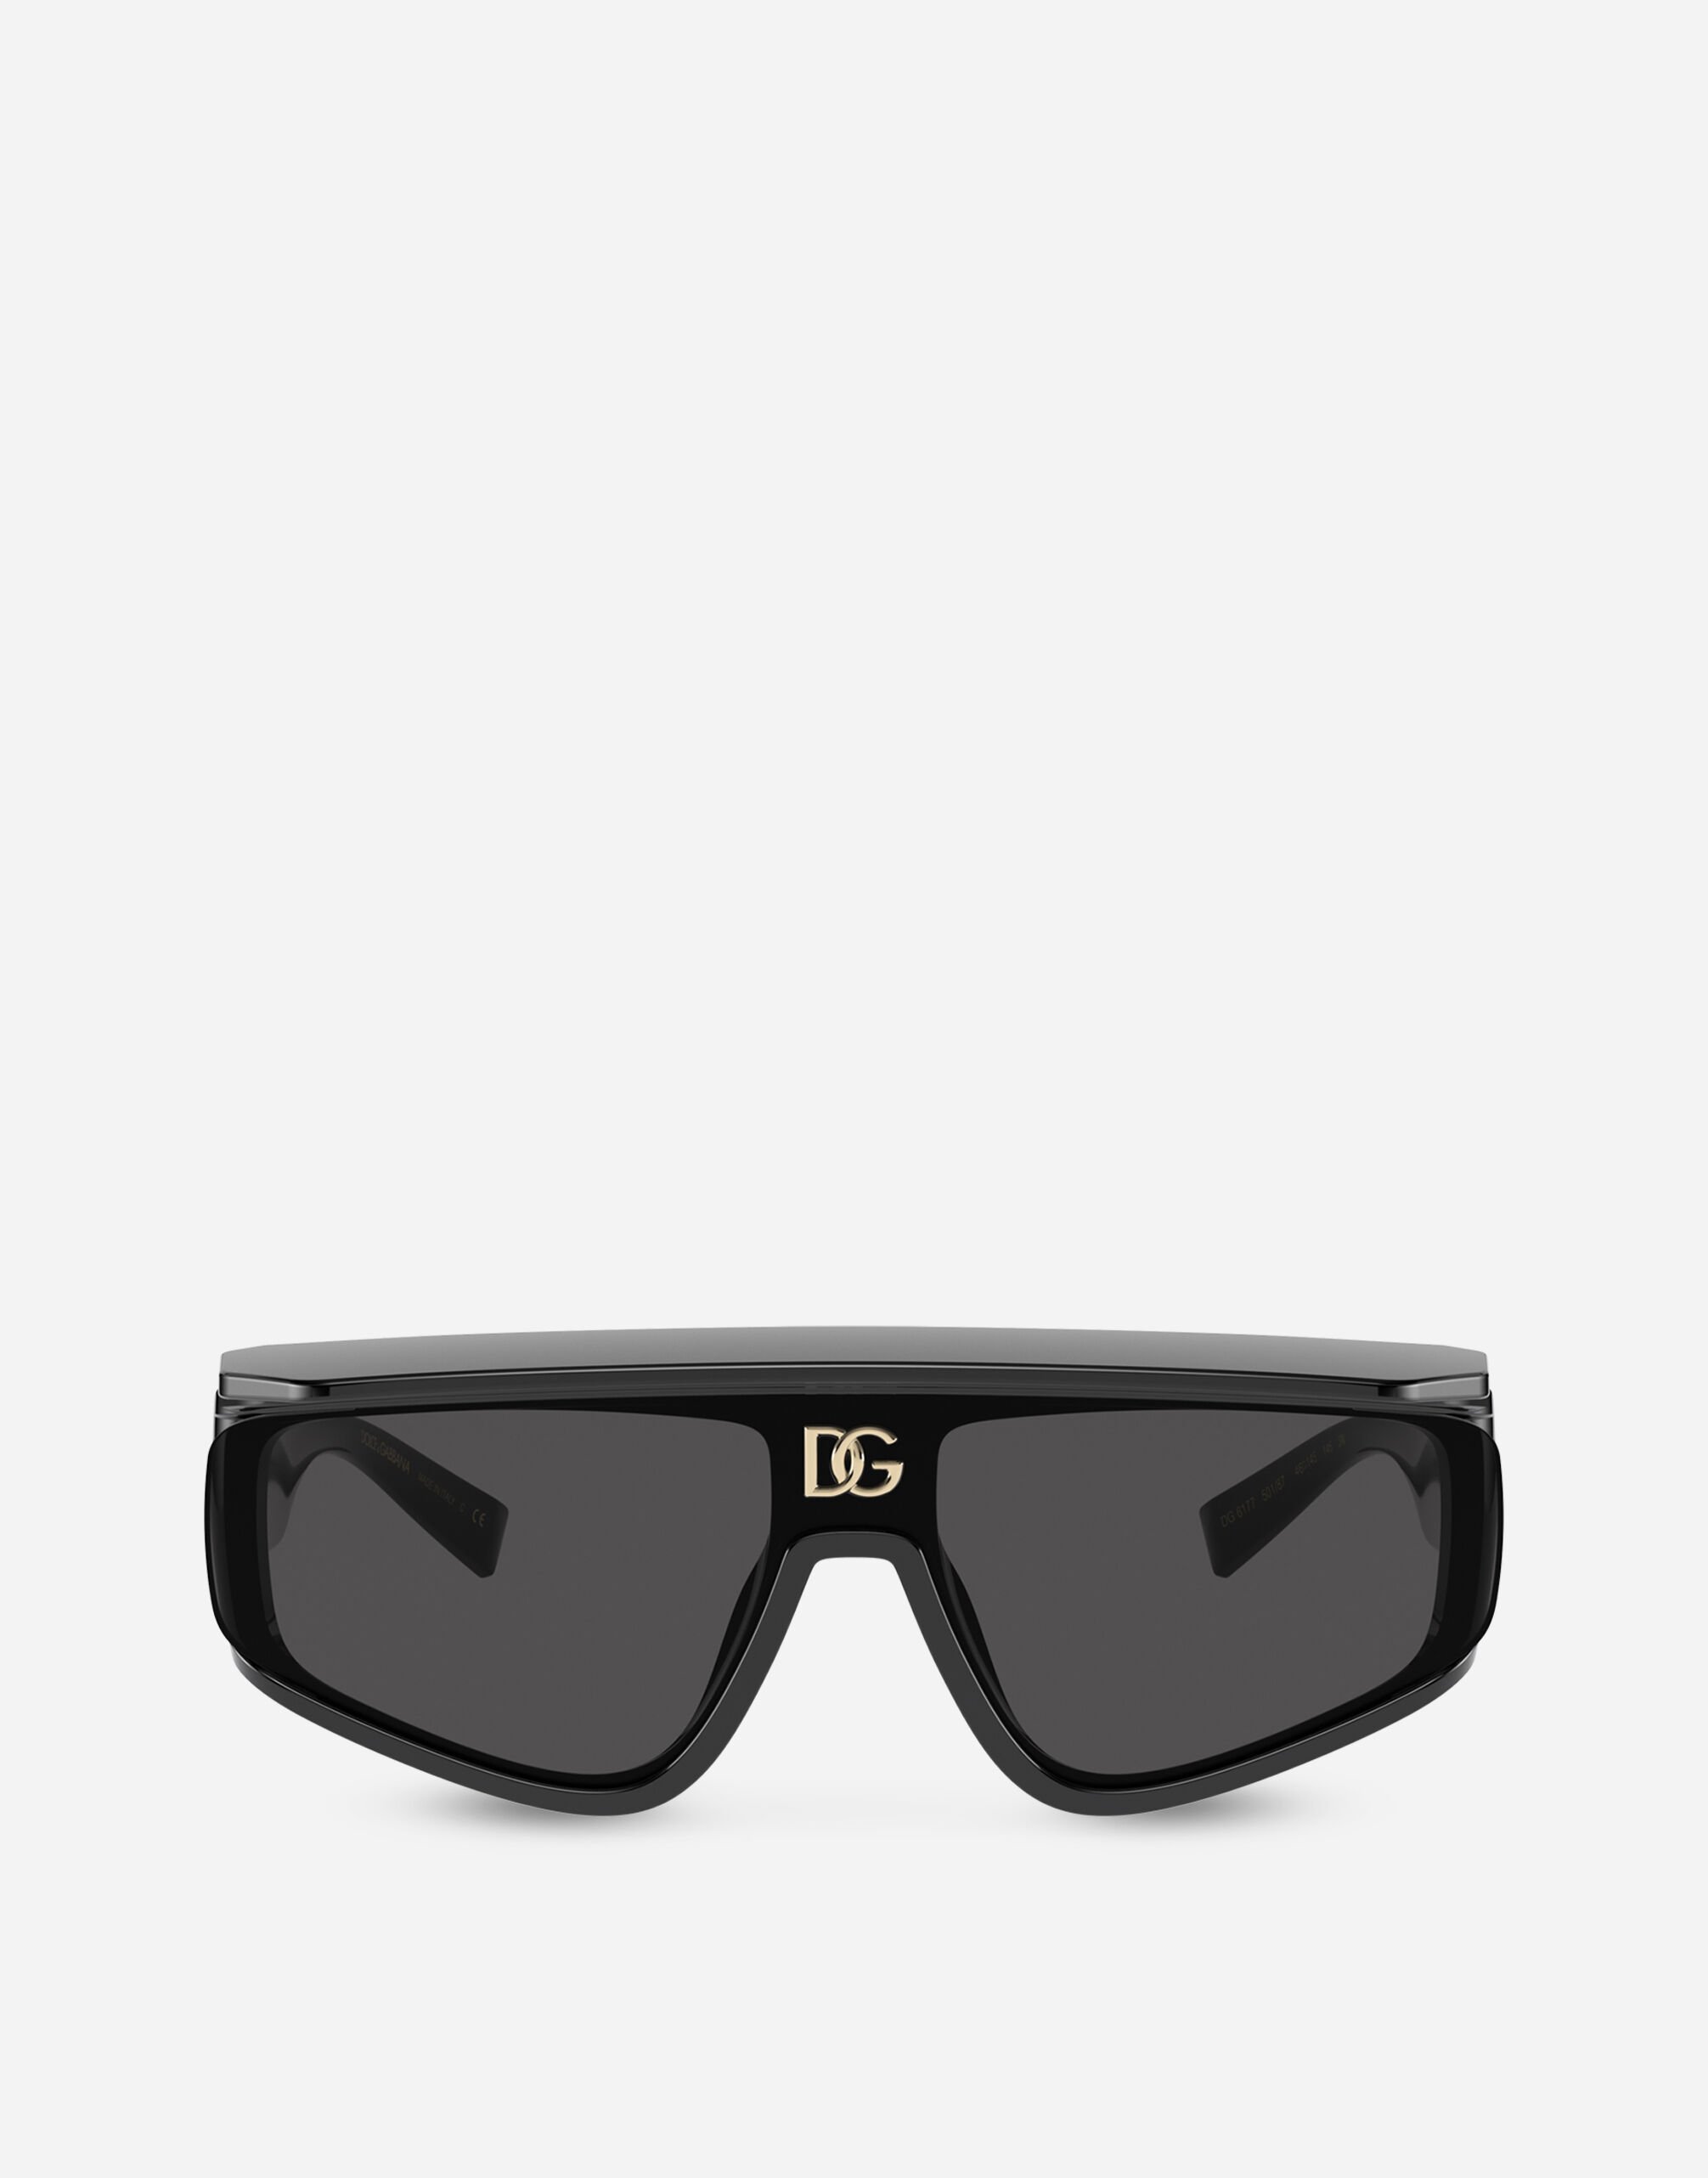 Dolce & Gabbana DG crossed sunglasses Gold WANR1GWMIXD